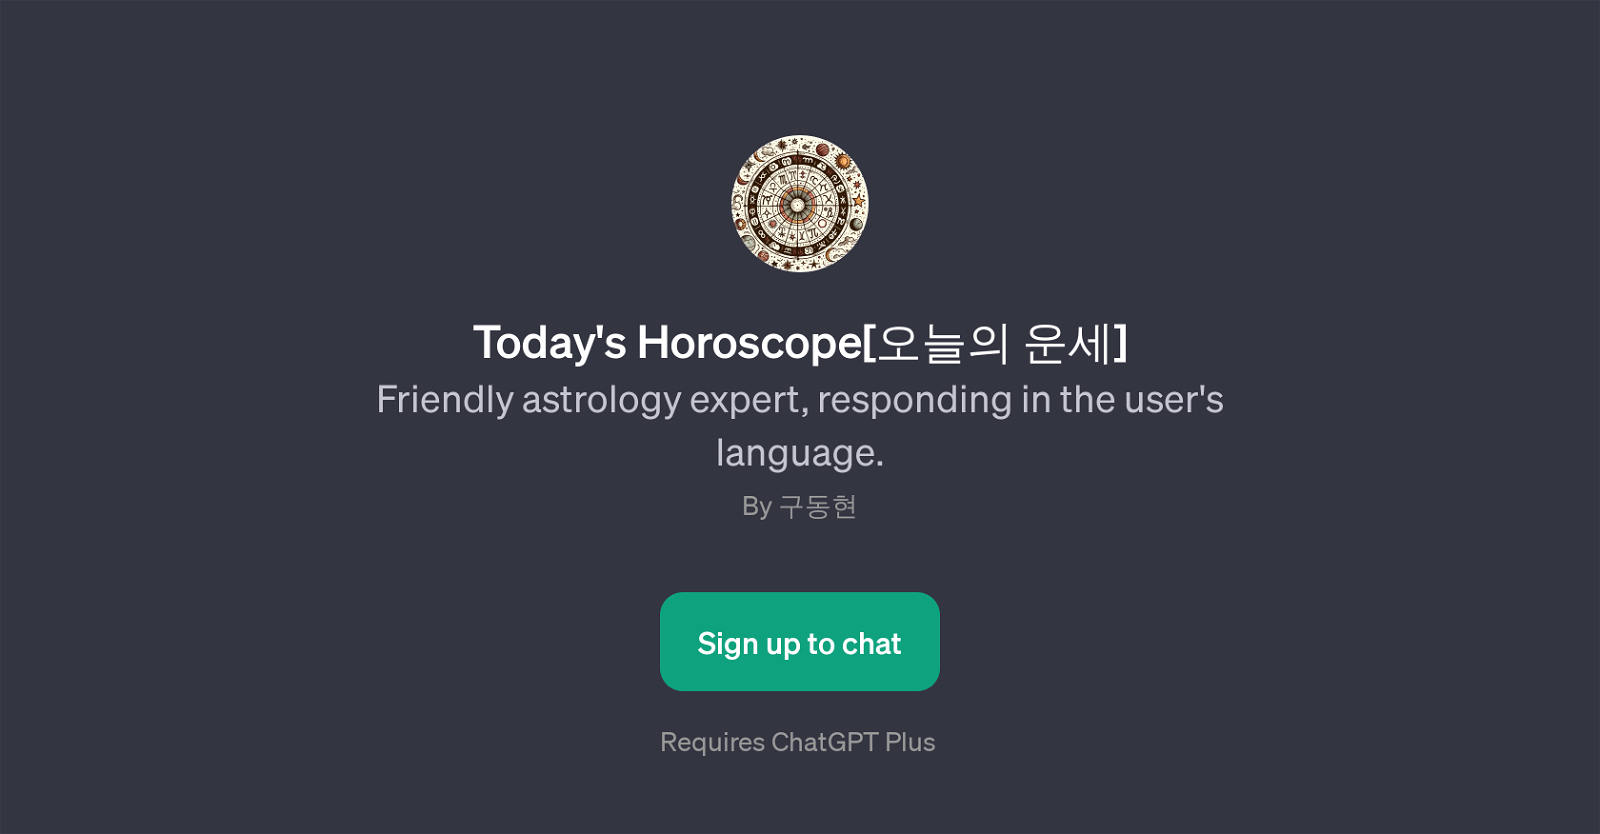 Today's Horoscope [ ] website